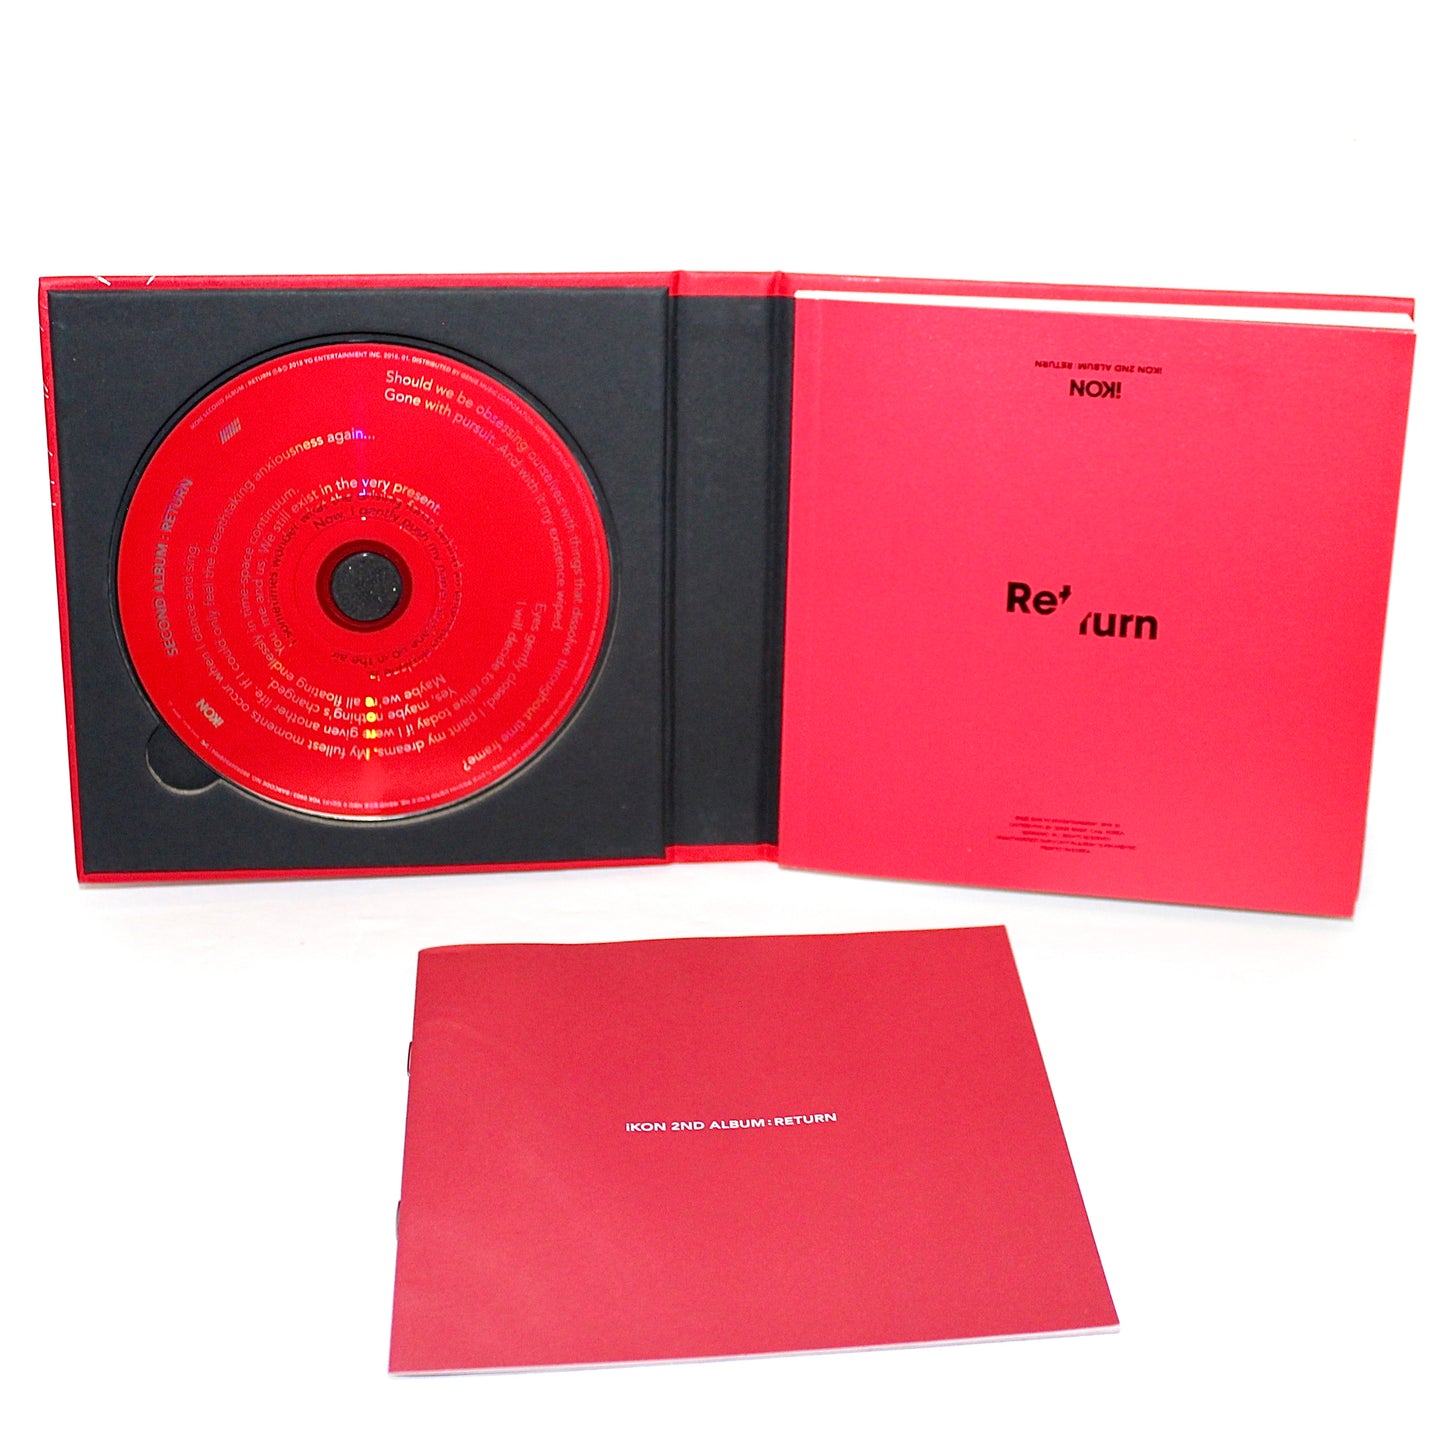 iKON 2nd Album: Return | Red Ver.